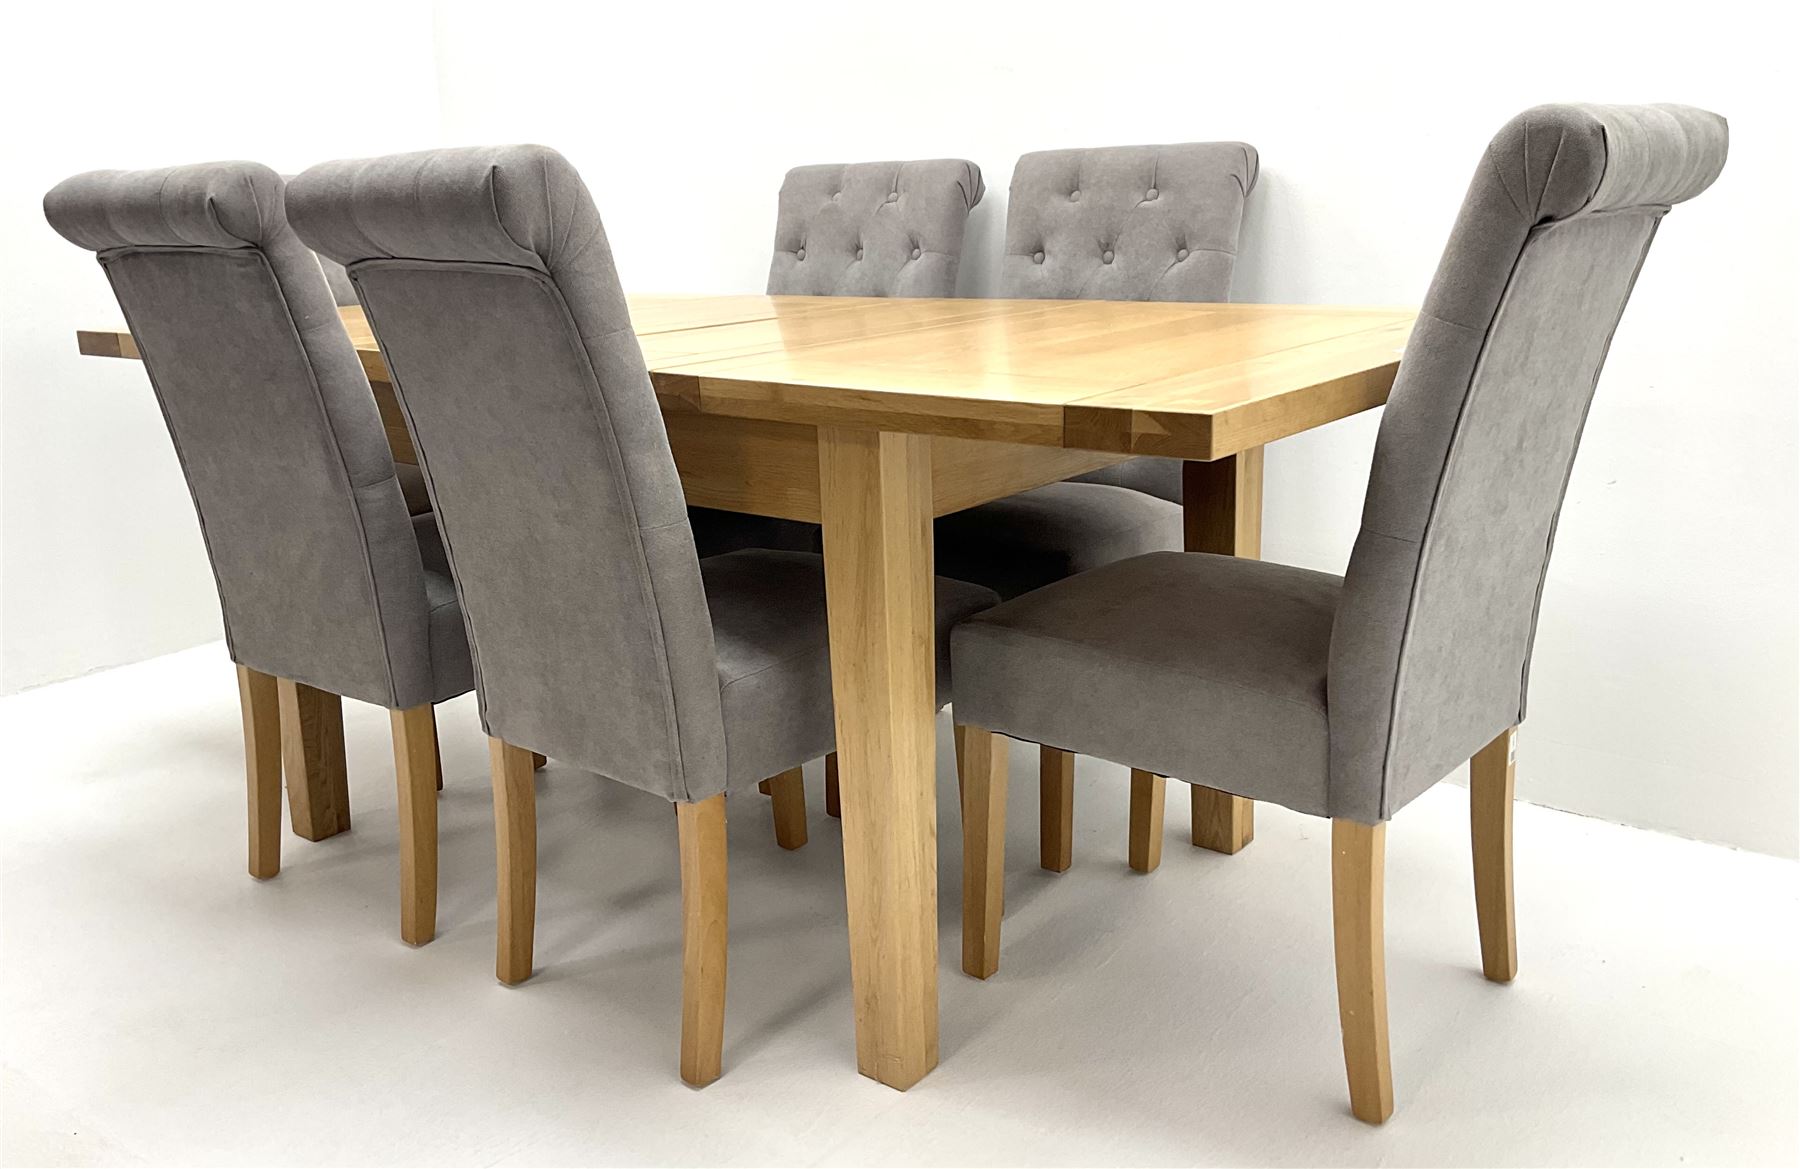 Light oak extending dining table - Image 4 of 6